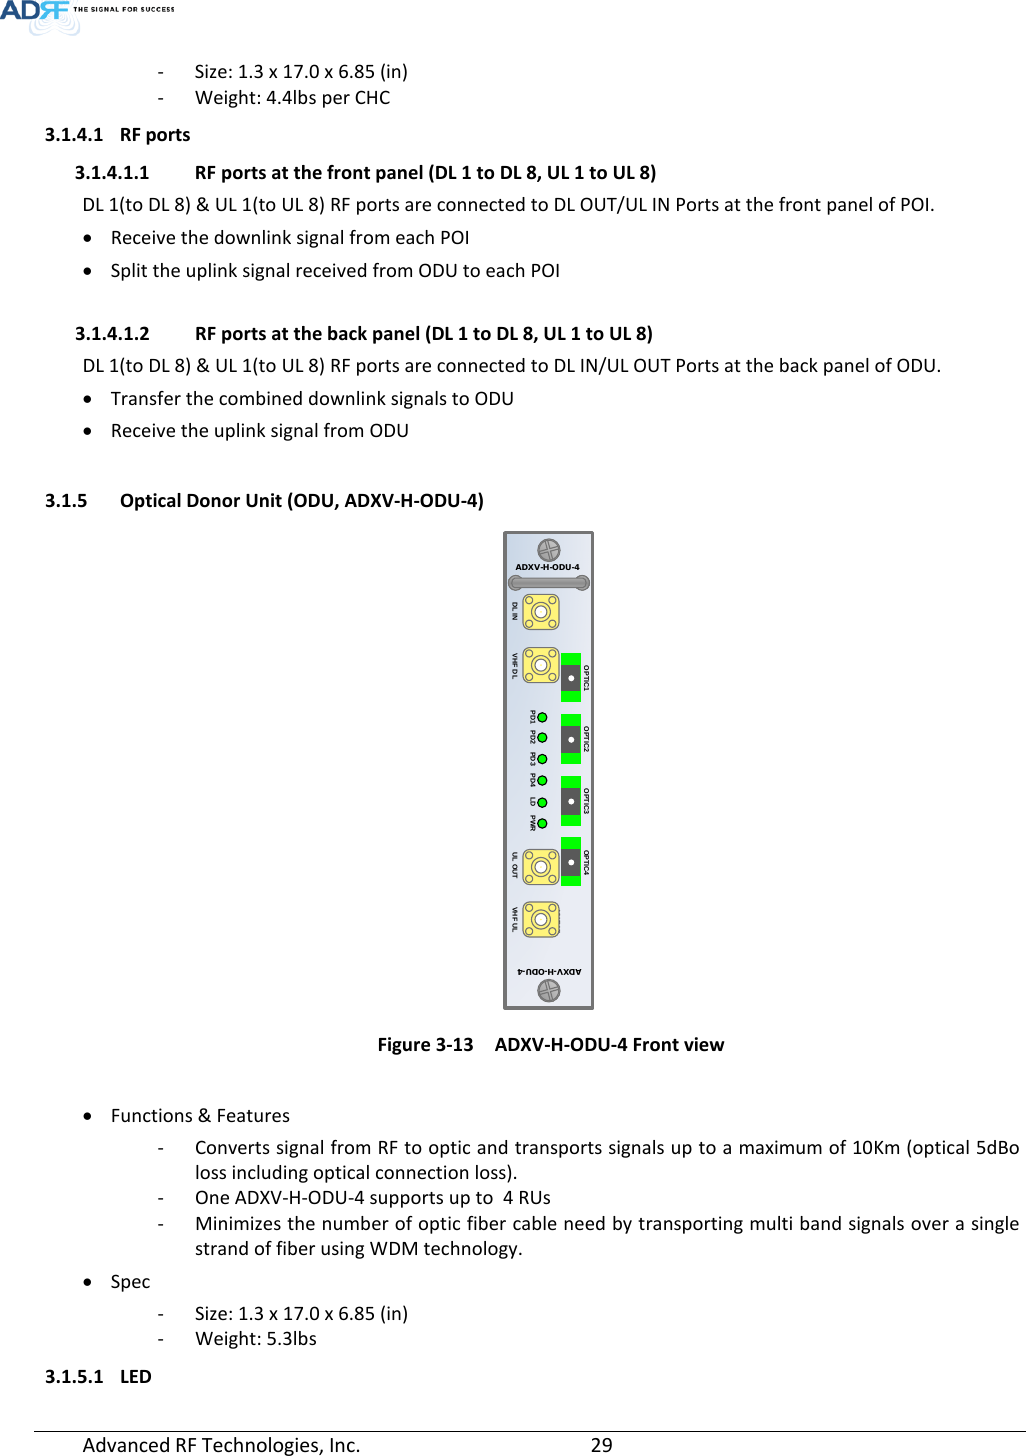 Page 29 of ADRF KOREA ADXV-R-336 DAS (Distributed Antenna System) User Manual ADXV DAS